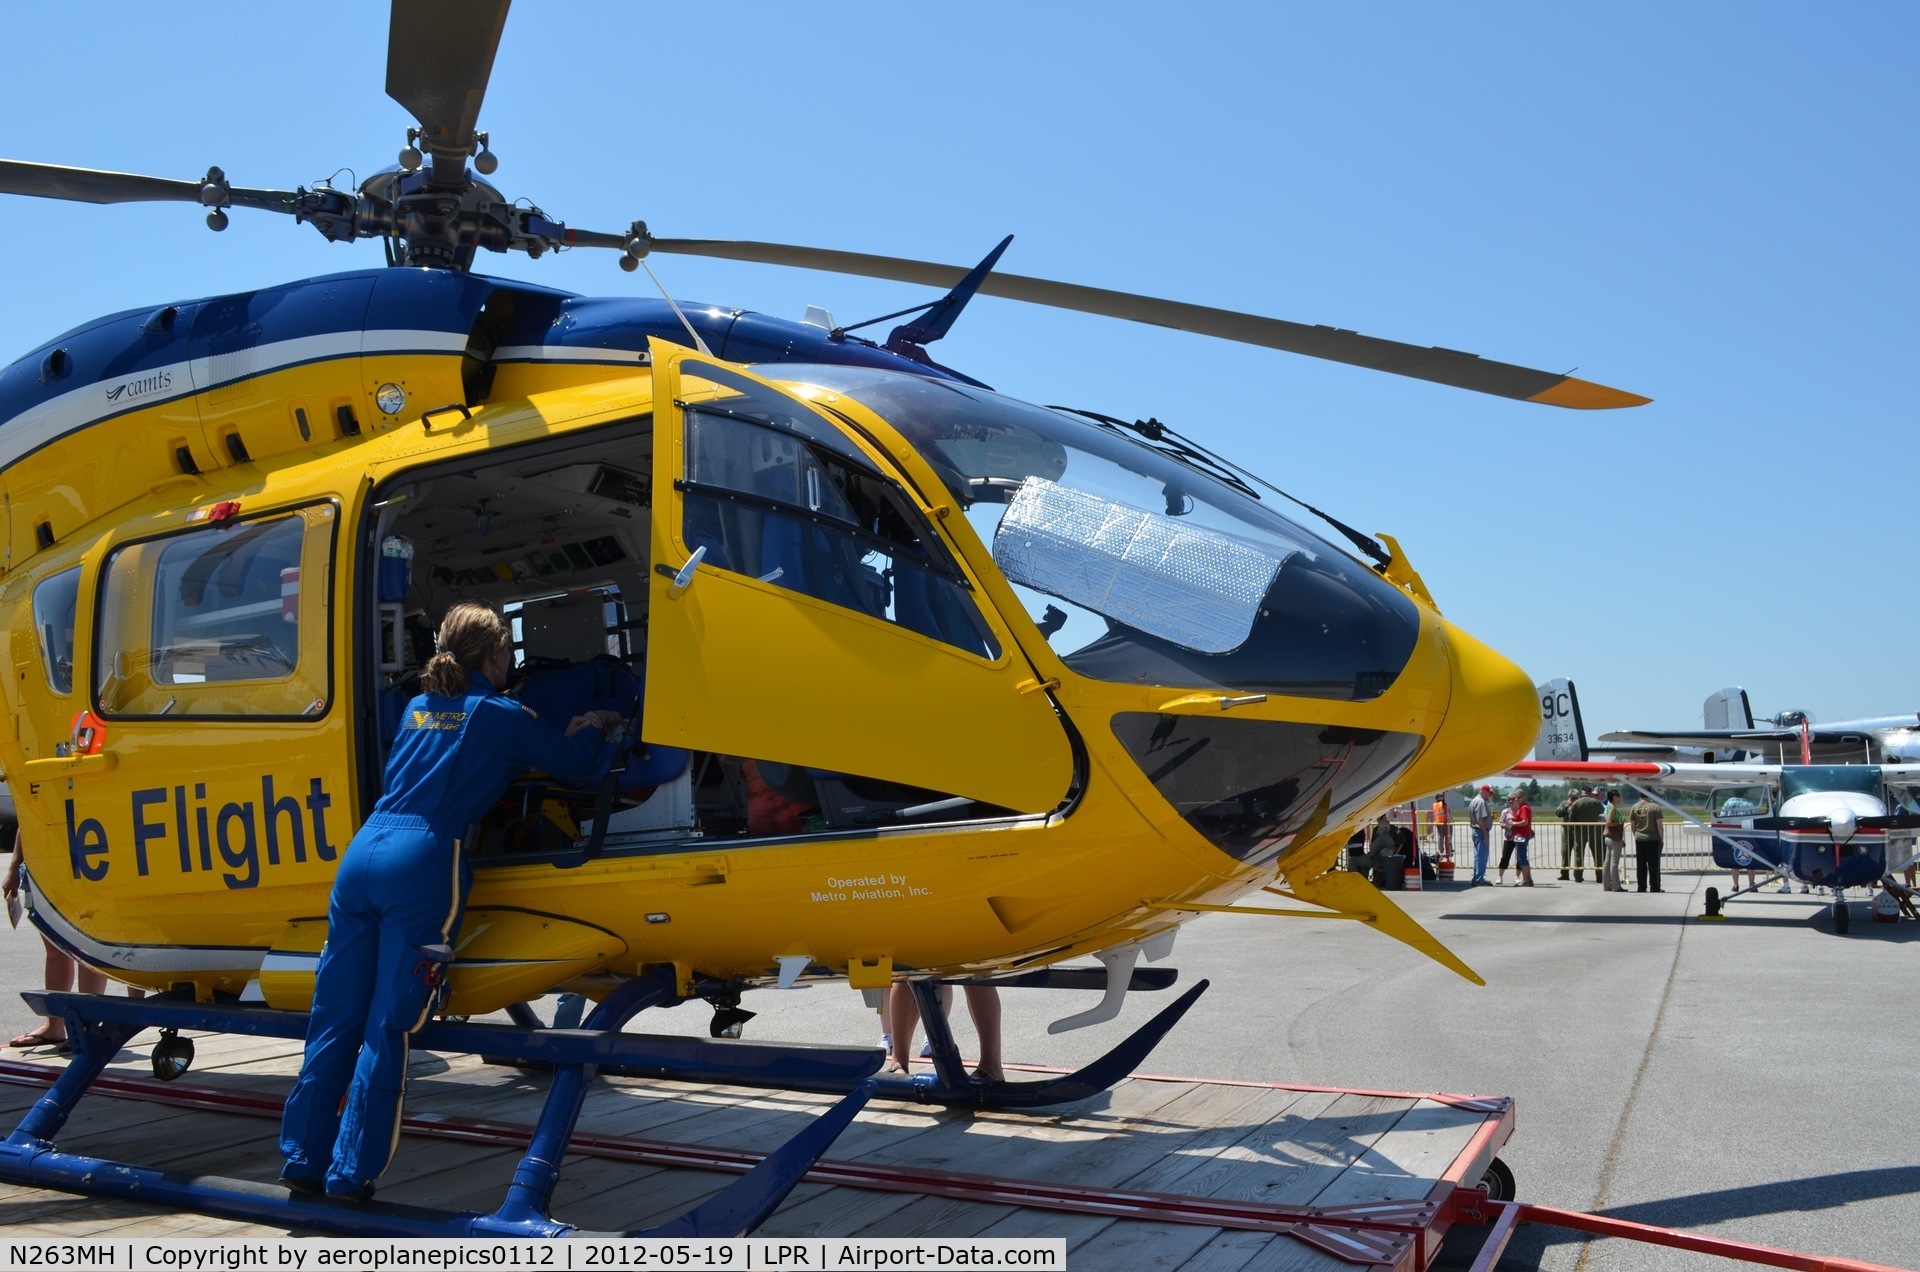 N263MH, Eurocopter-Kawasaki EC-145 (BK-117C-2) C/N 9311, N263MH seen at KLPR for an International Learn to Fly Day.